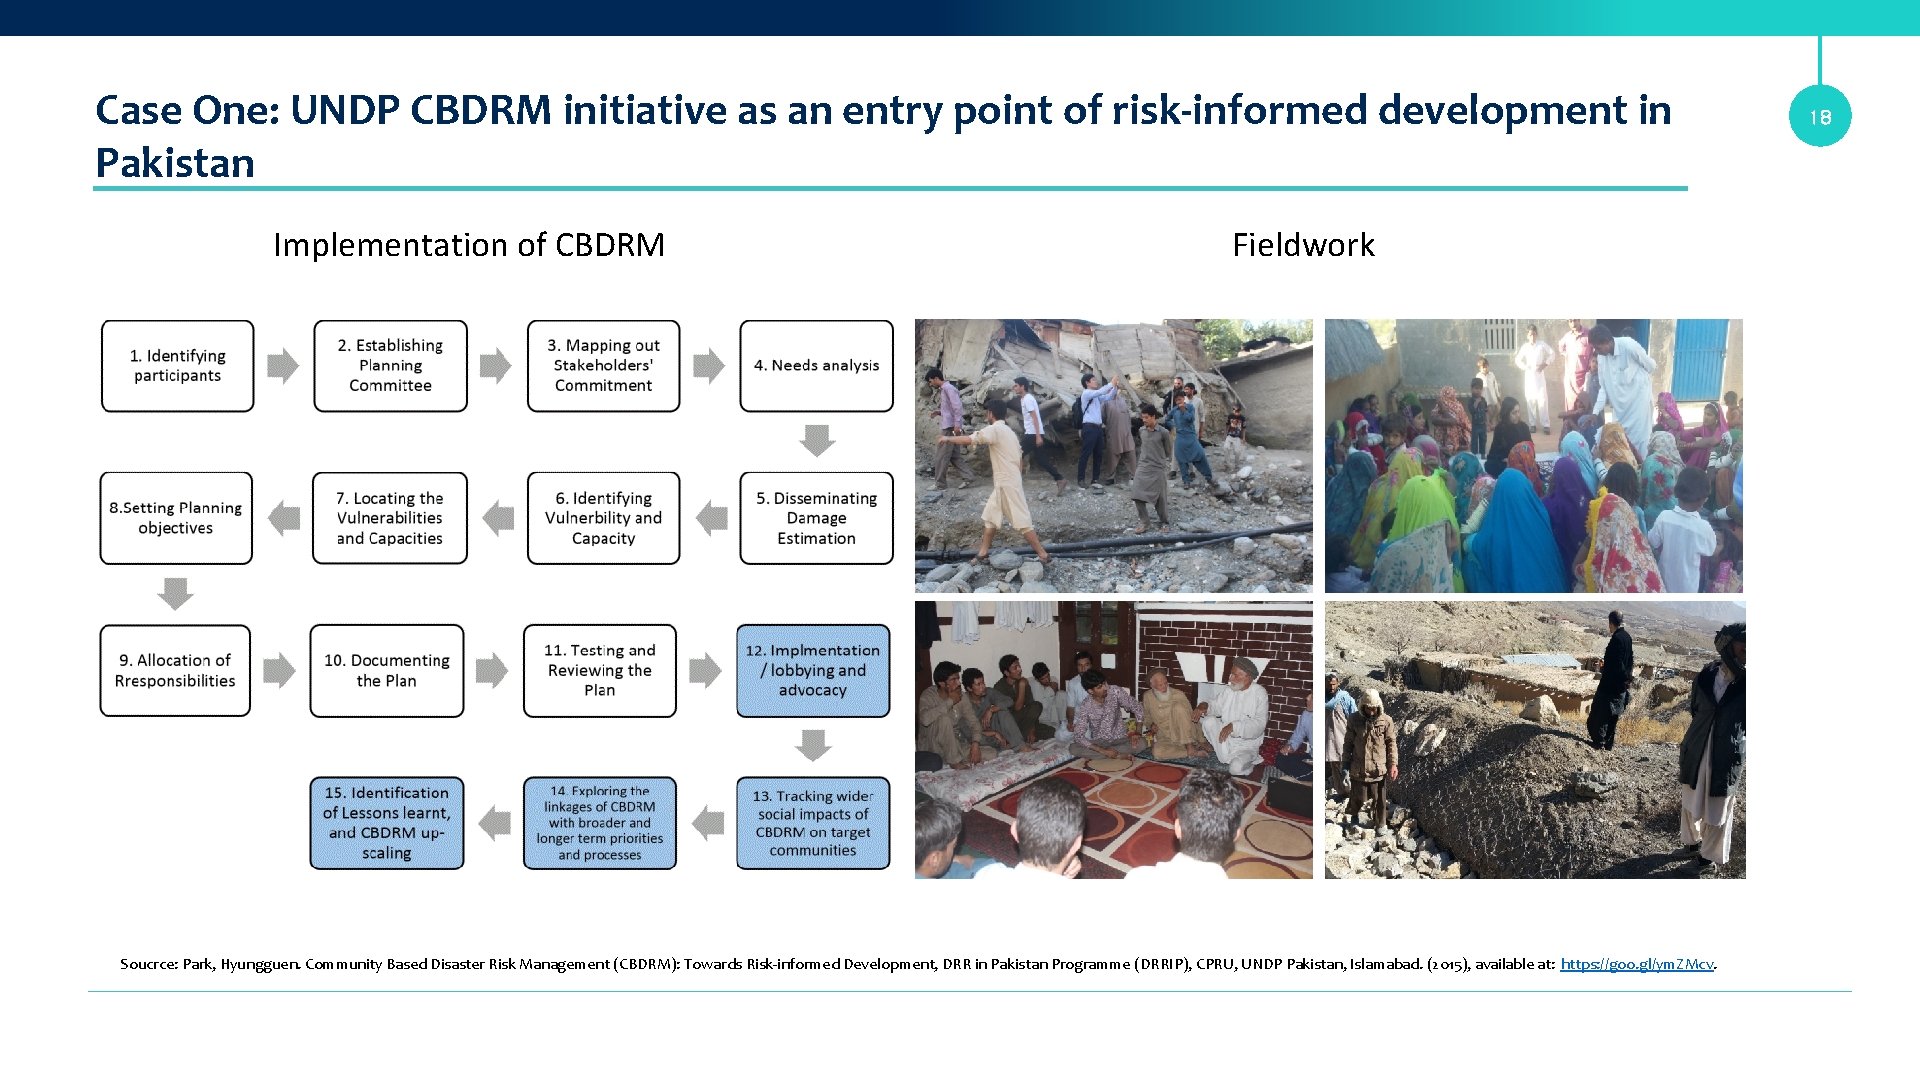 Case One: UNDP CBDRM initiative as an entry point of risk-informed development in Pakistan